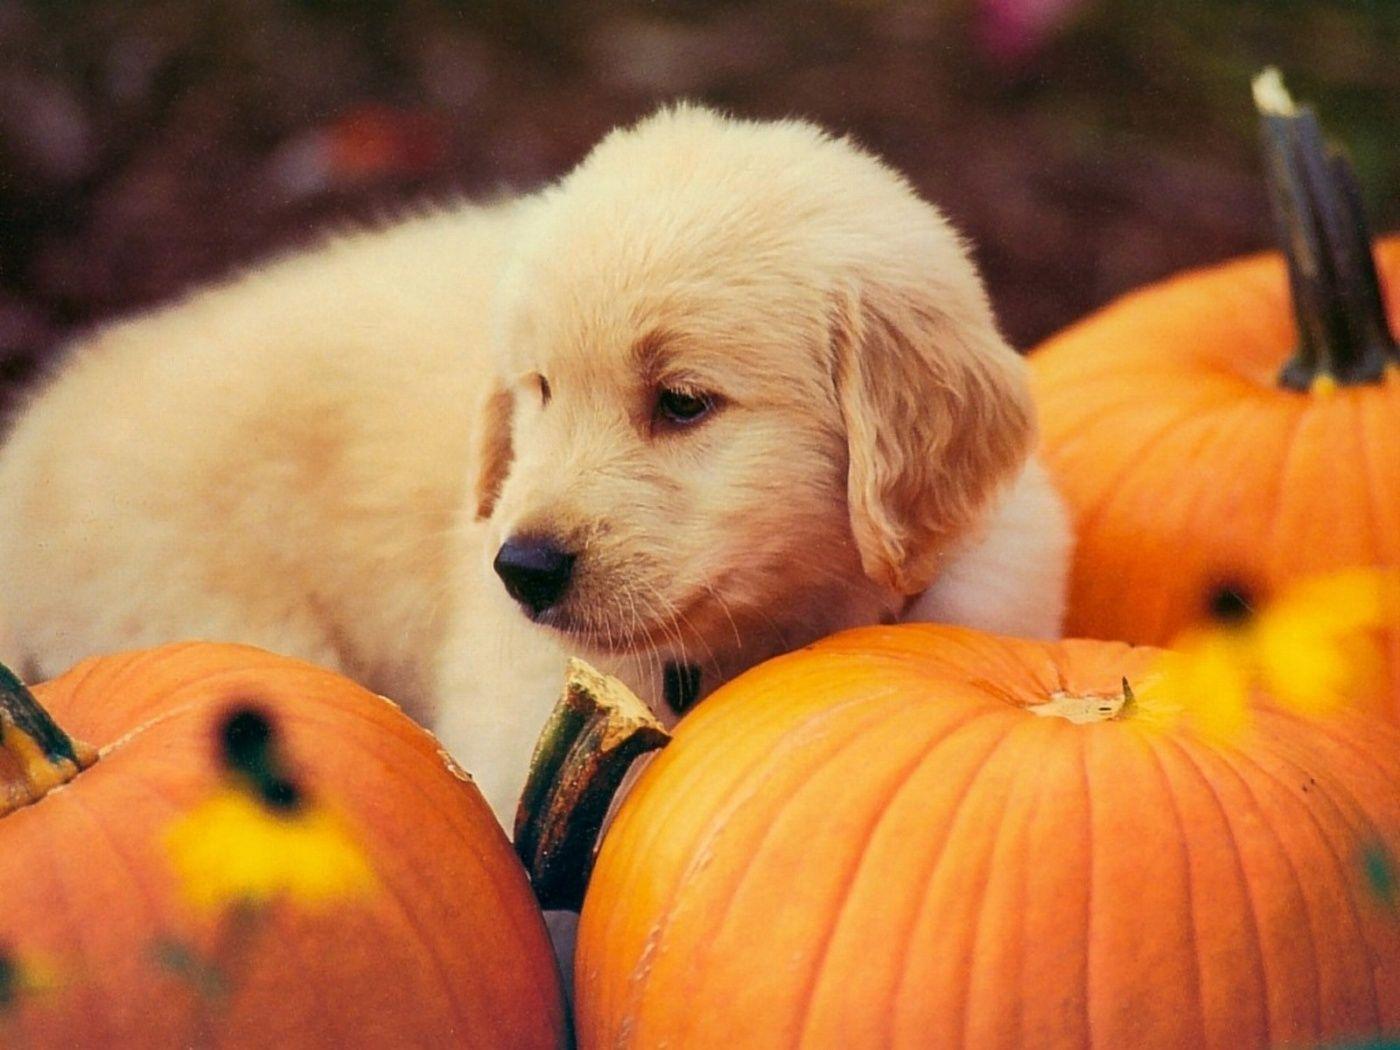 Cute Puppy Halloween Wallpapers - Top Free Cute Puppy Halloween